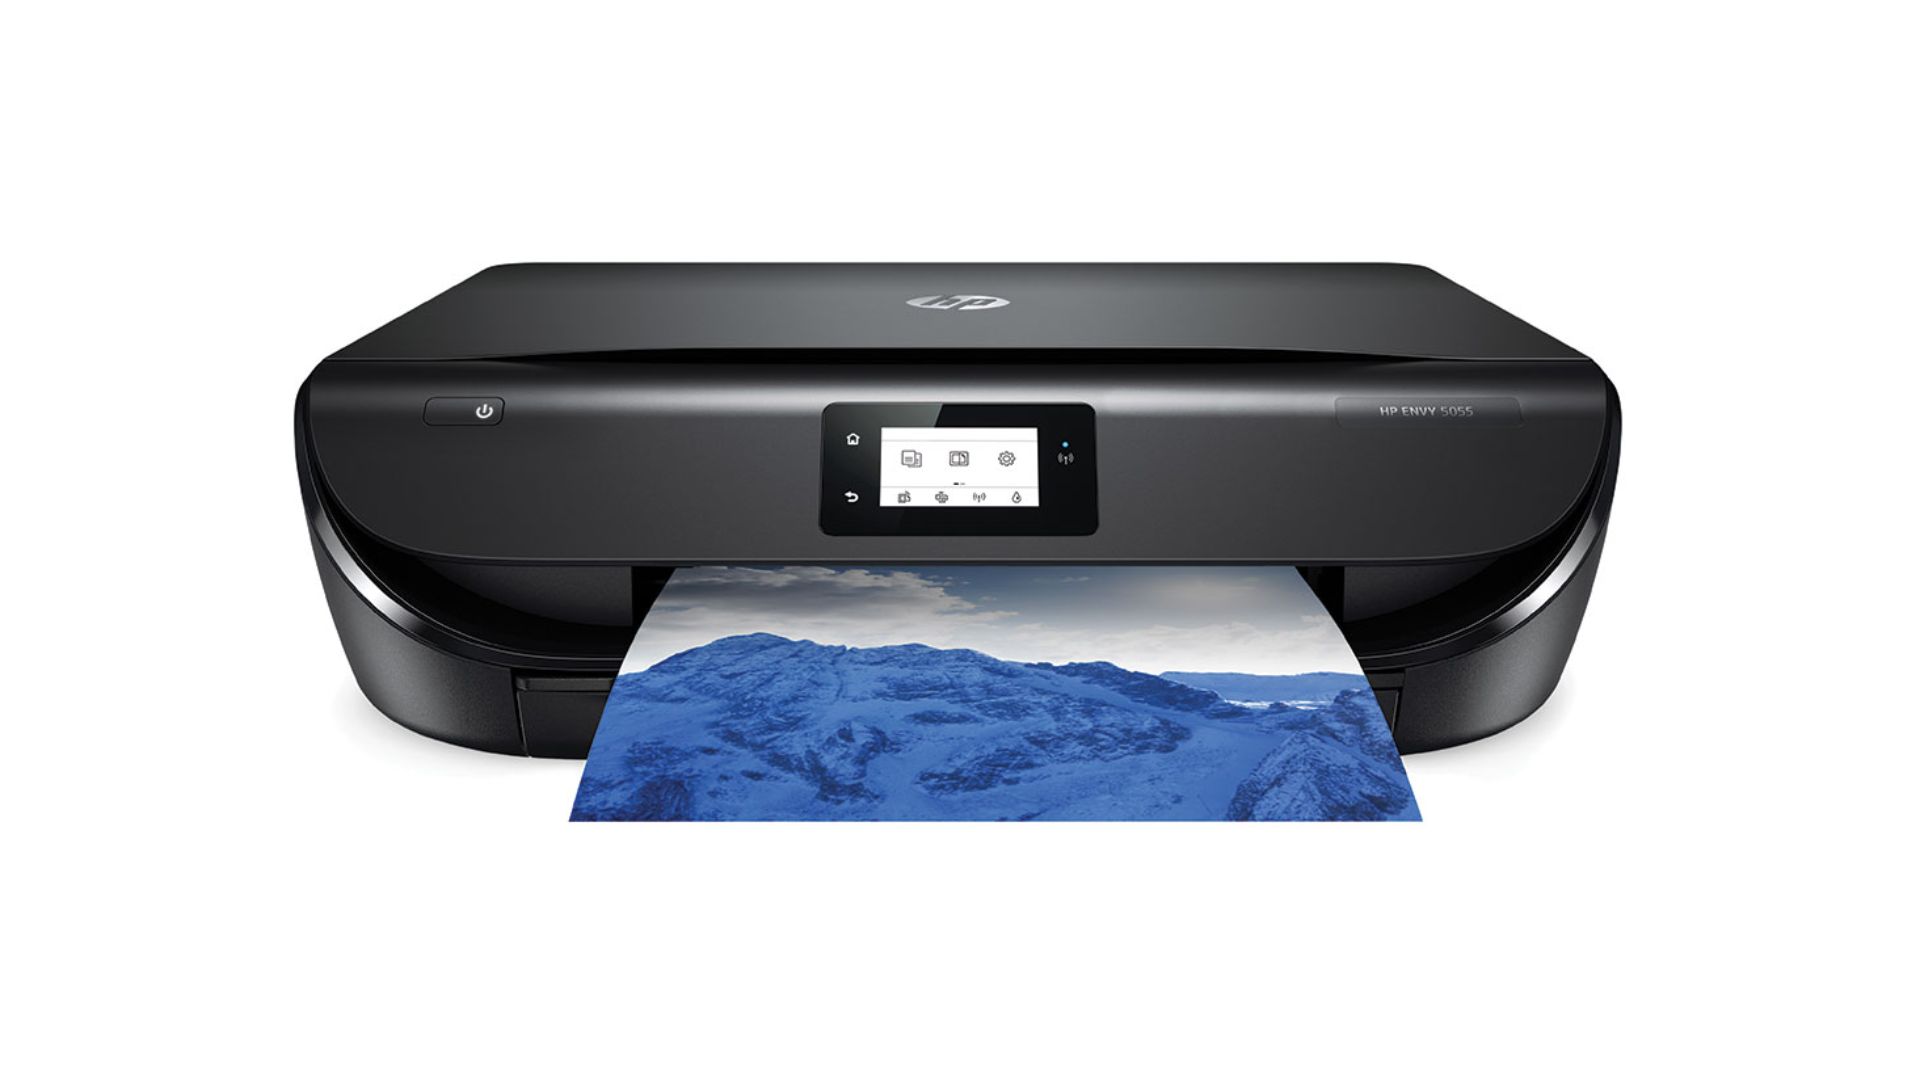 HP Envy 5055 - The best budget inkjet printer under 200$ for graphic designers